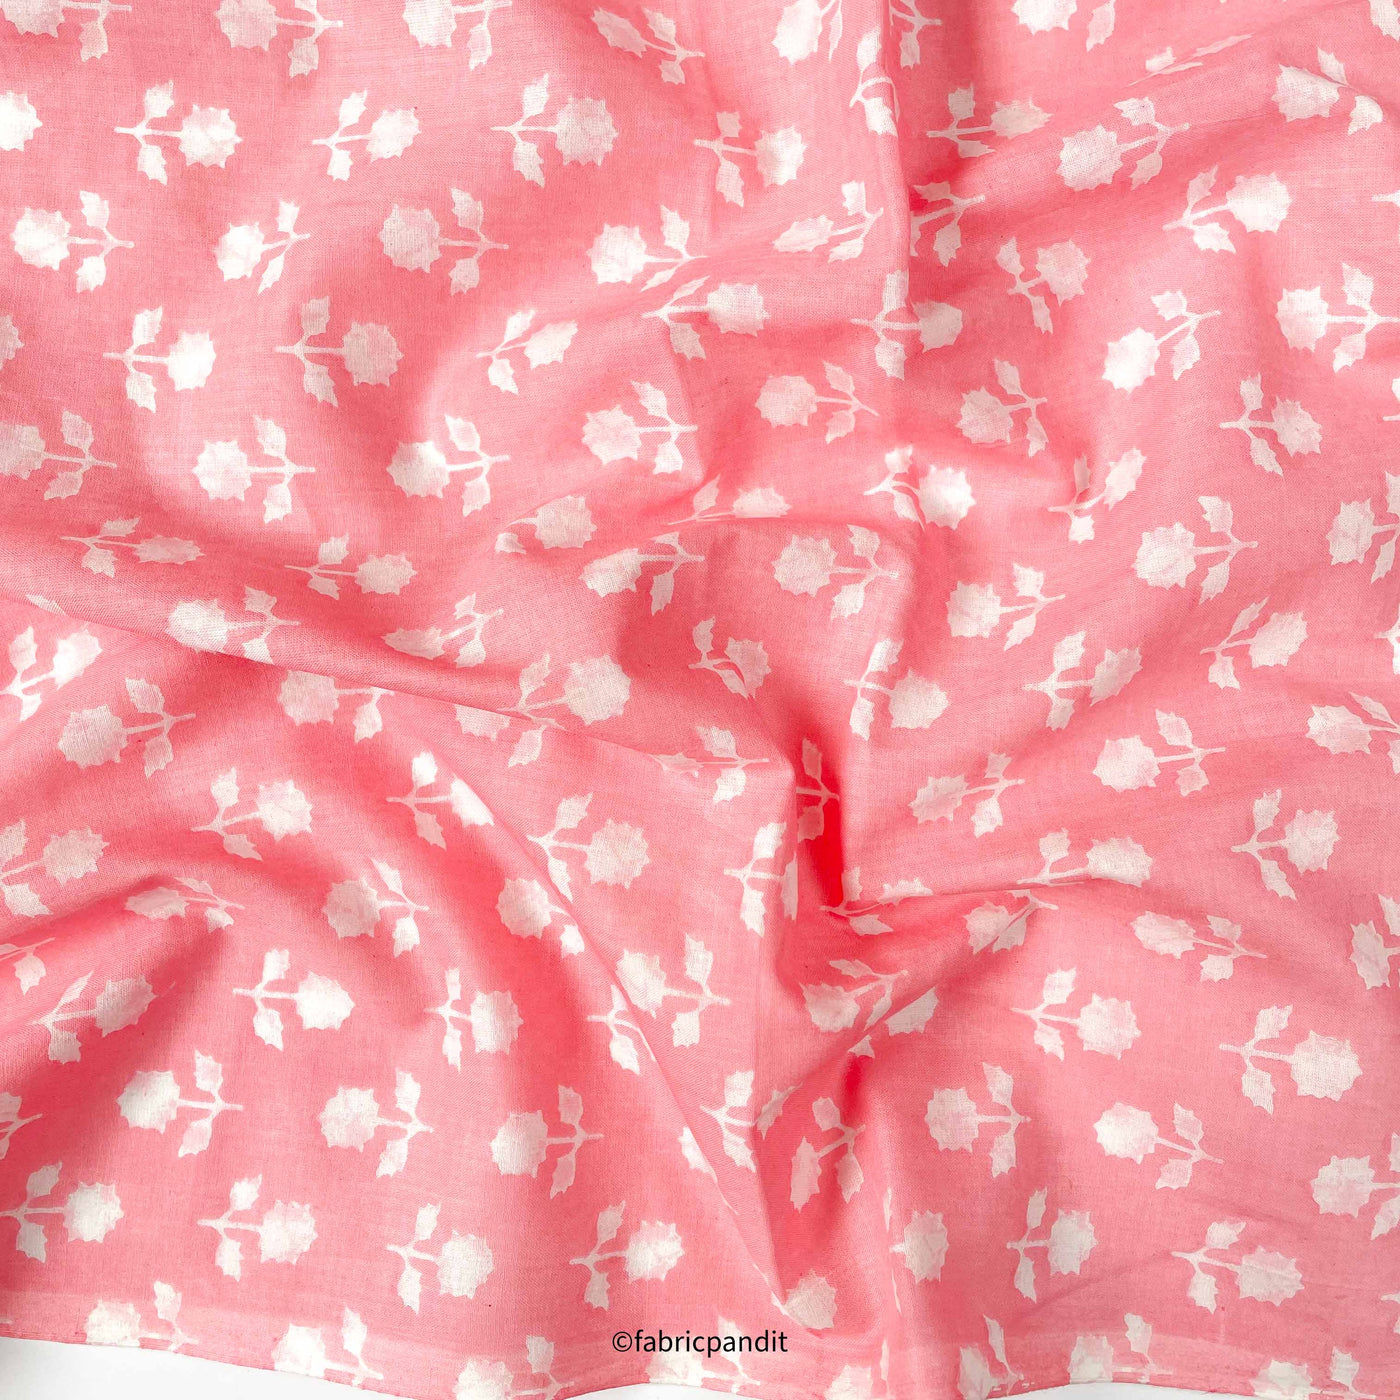 Hand Block Printed Cotton Fabric Cut Piece (CUT PIECE) Soft Peach & White Abstract Floral Batik Natural Dyed Hand Block Printed Pure Cotton Fabric (Width 42 inches)